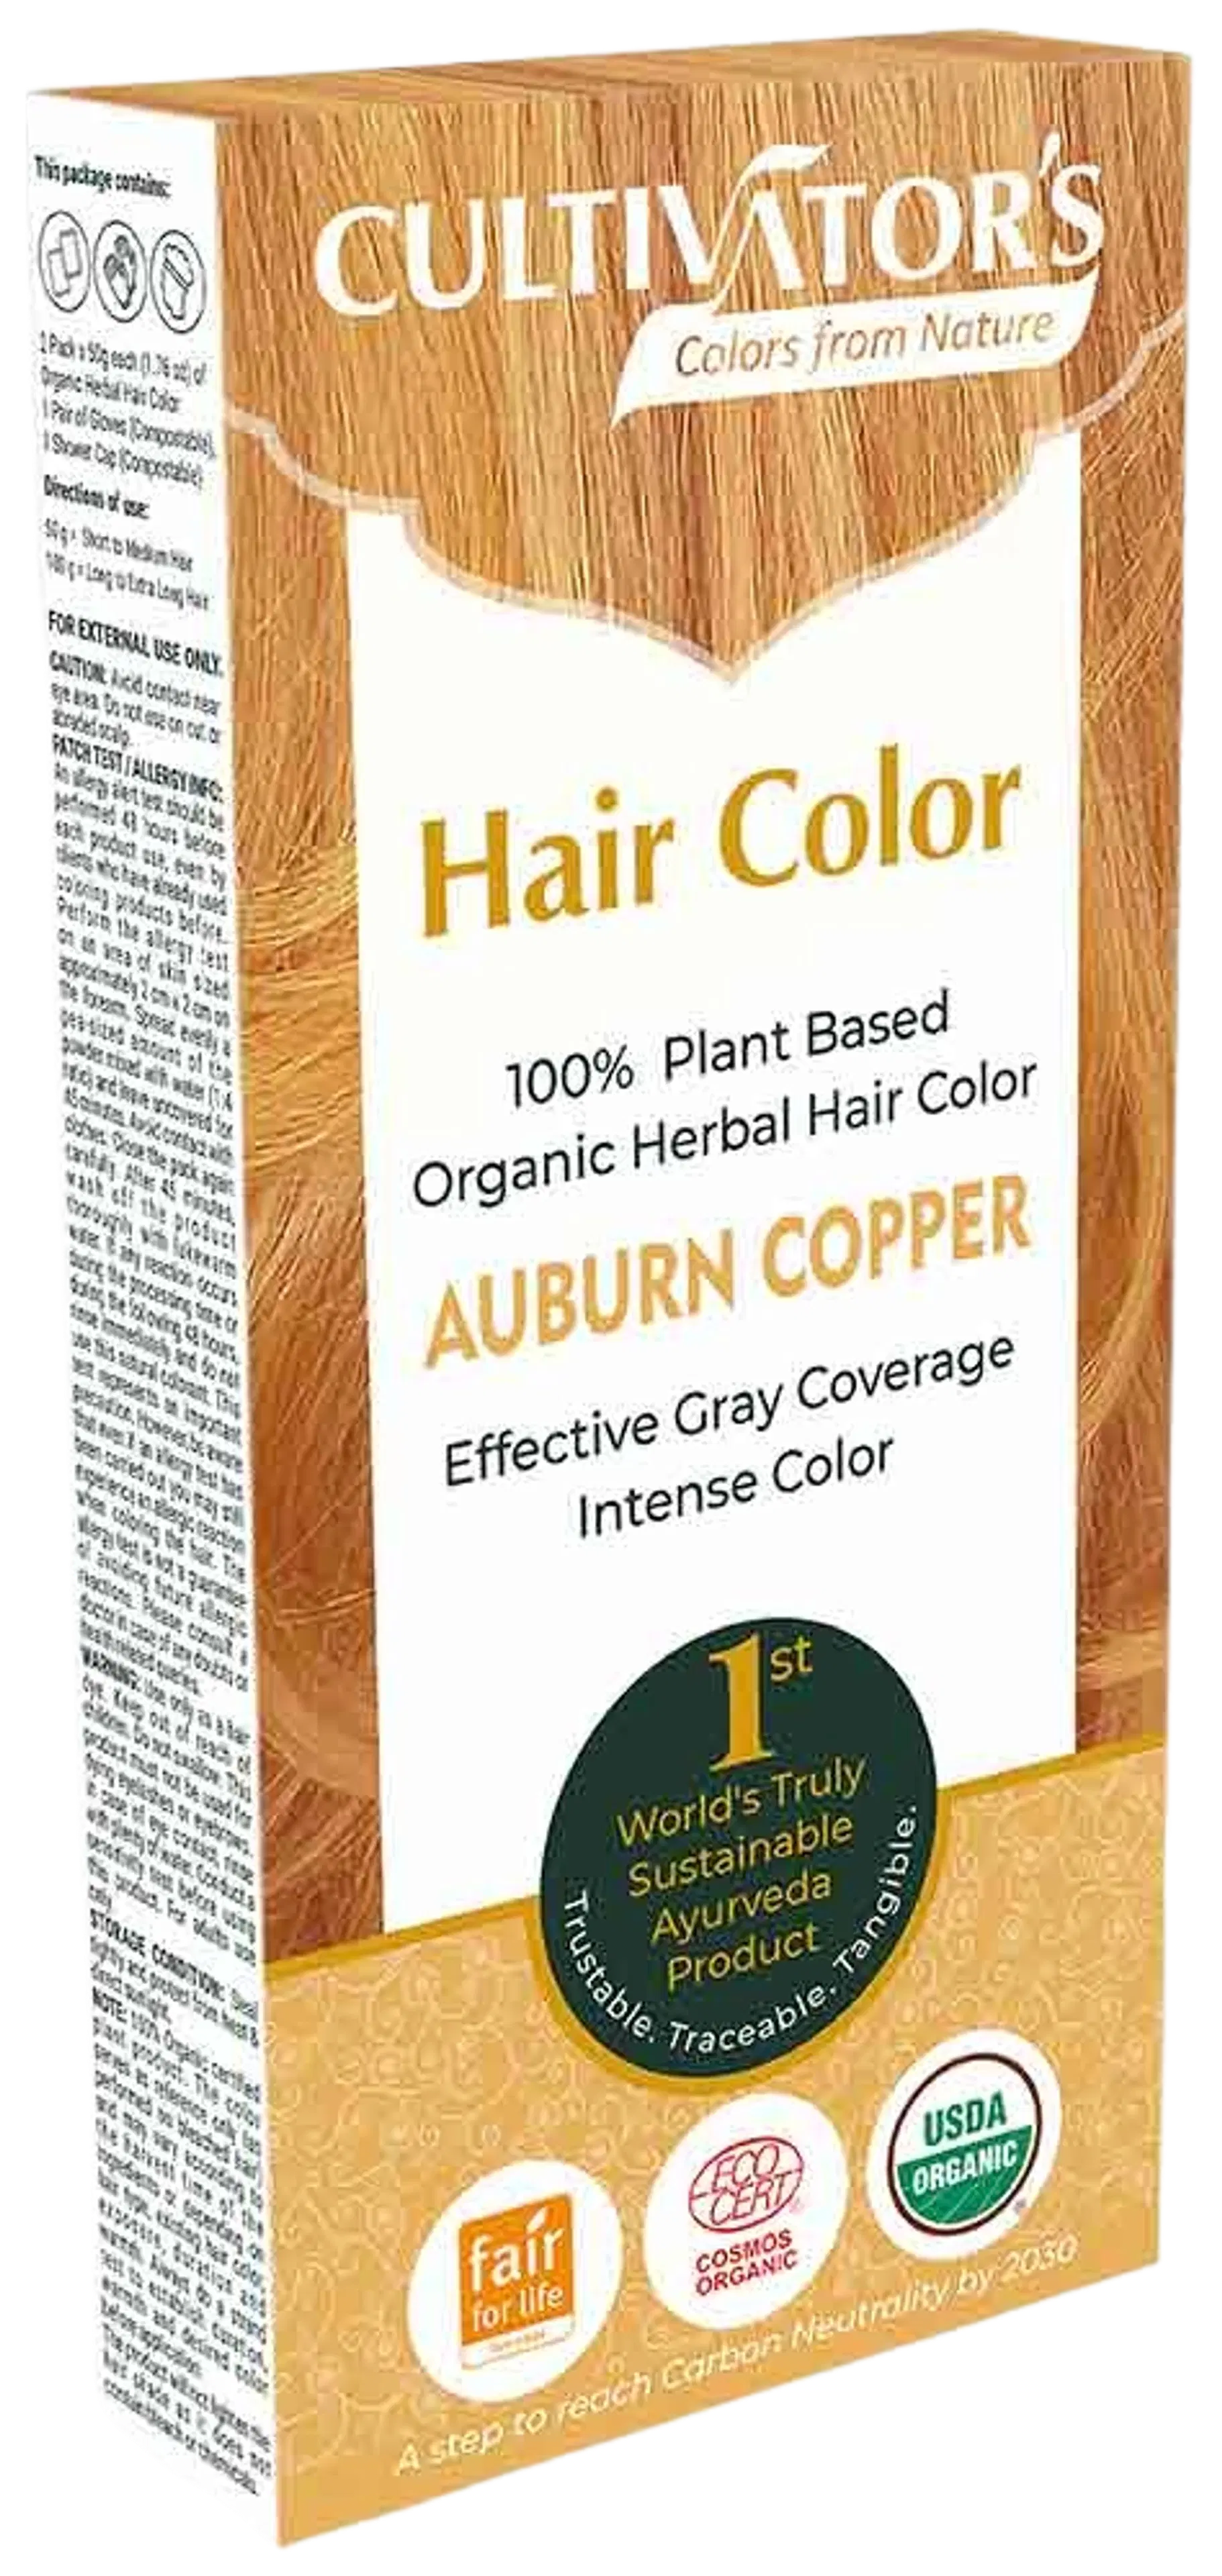 Cultivator's Hair Color Kasviväri Auburn Copper100g